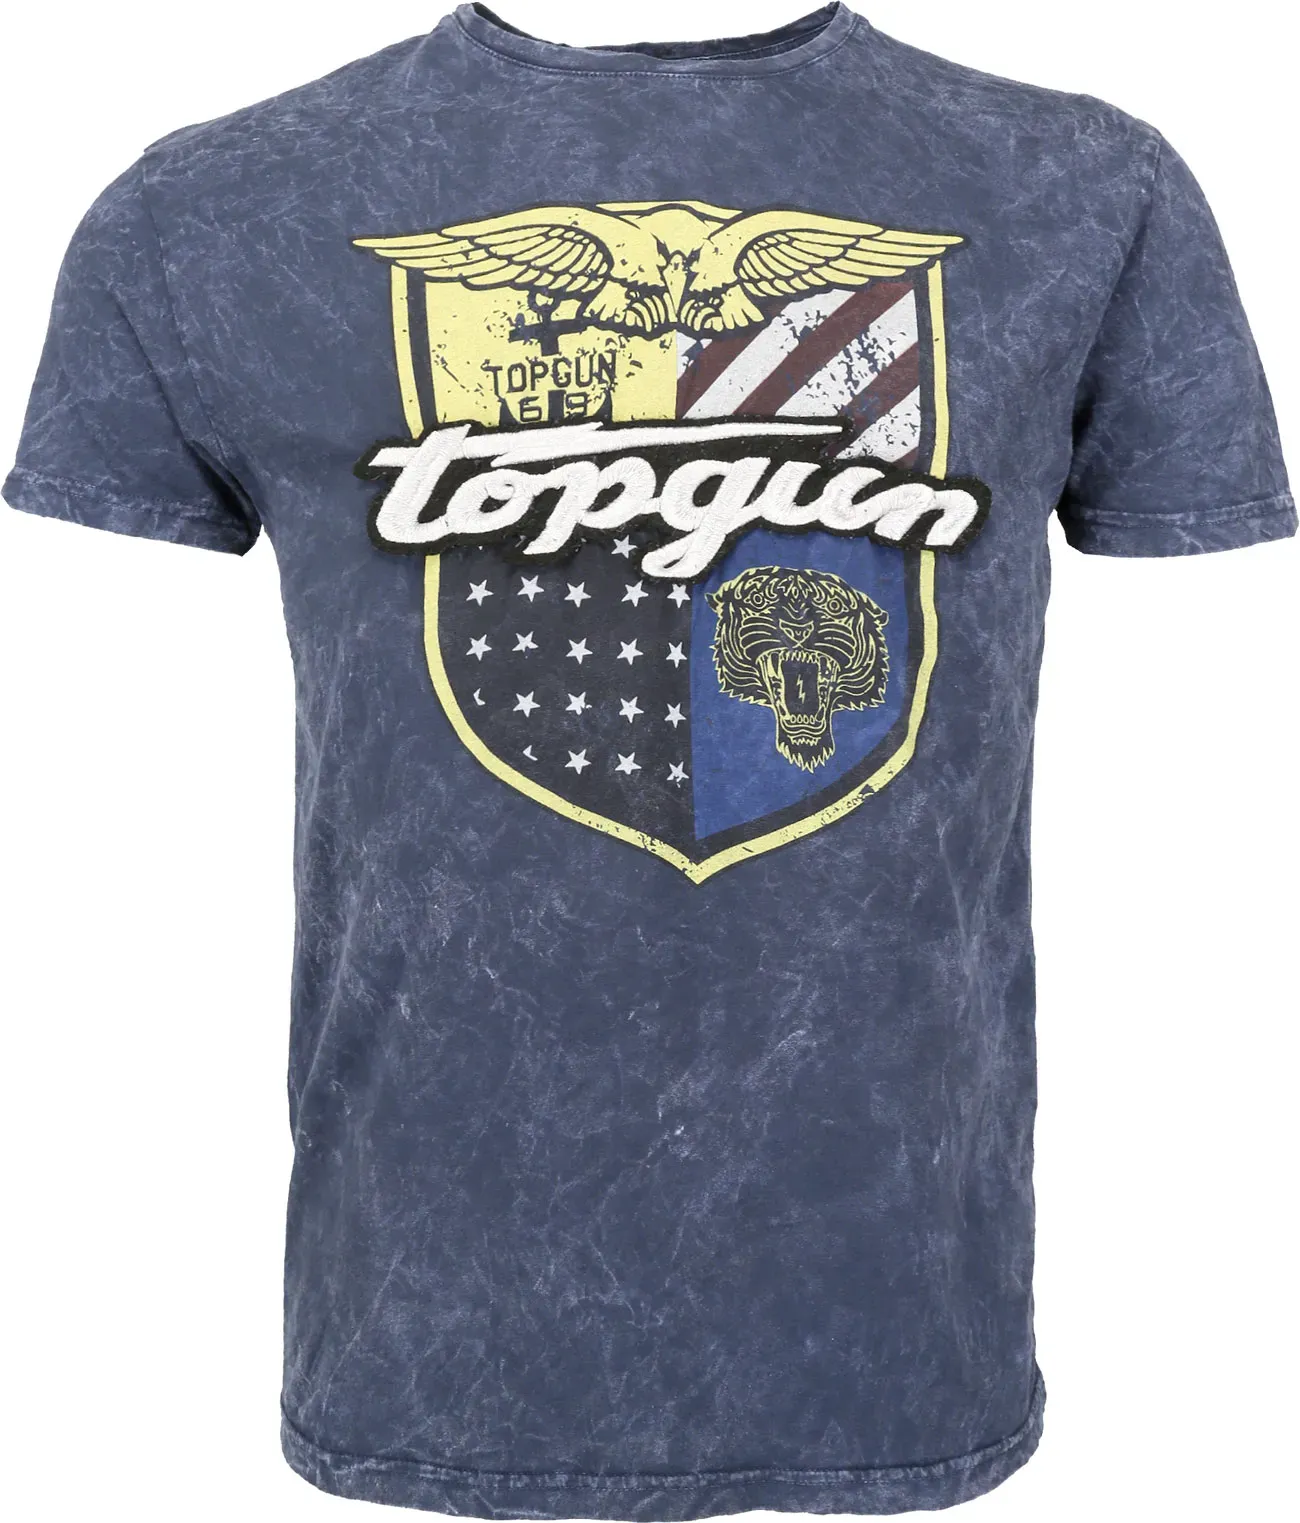 Top Gun Insignia, t-shirt - Bleu Foncé - XXL